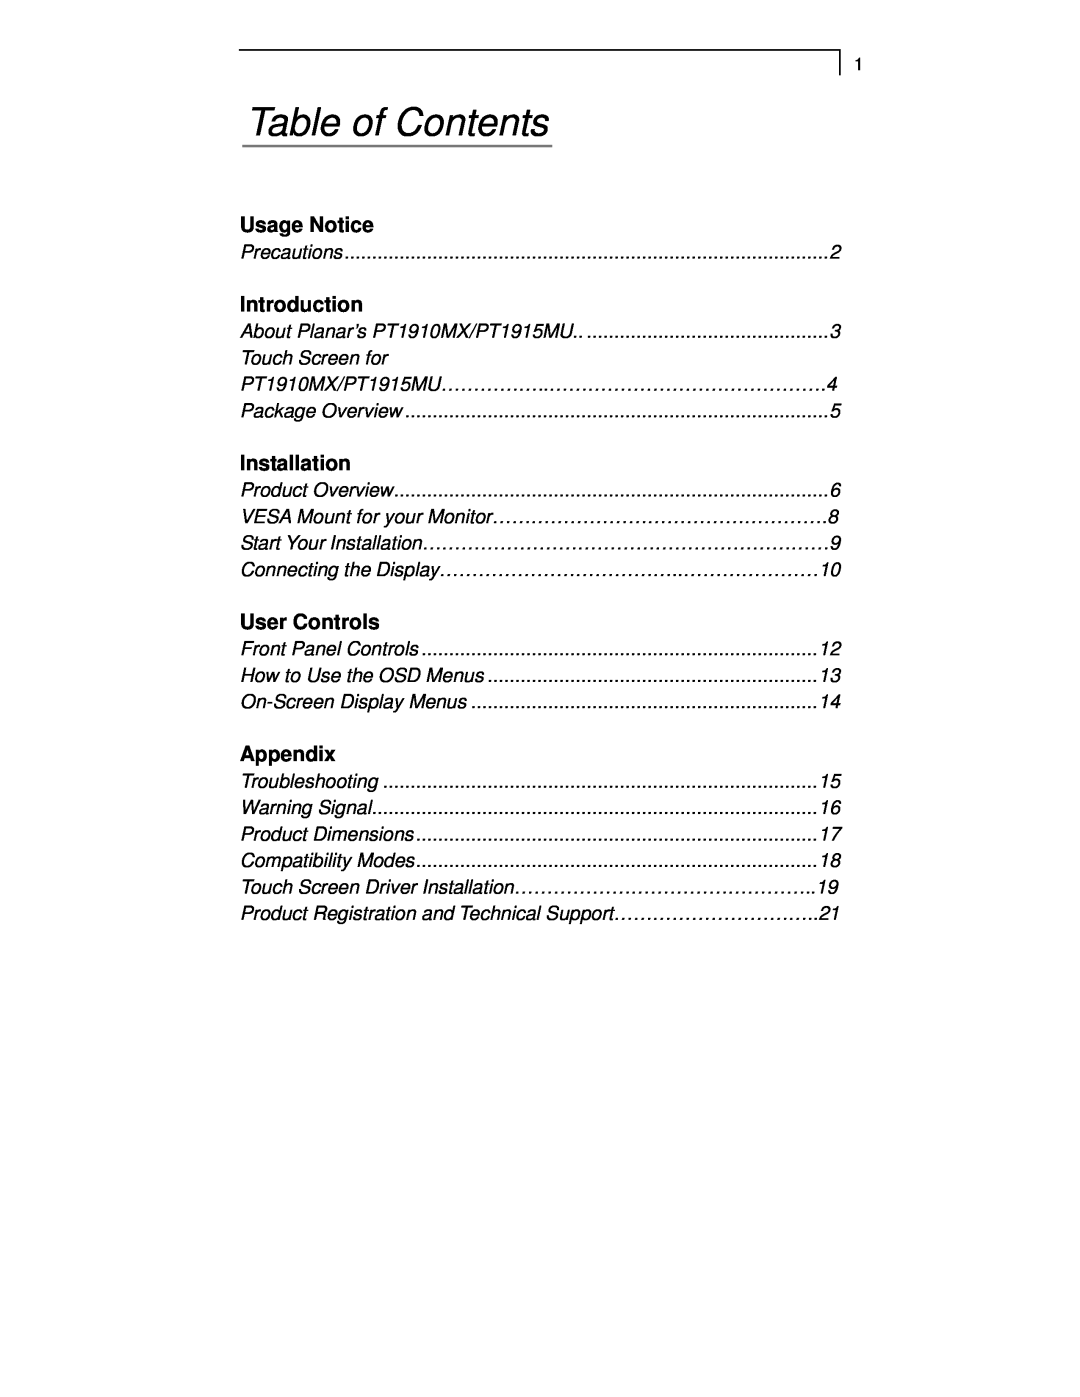 Planar PT1910MX, PT1915MU manual Table of Contents, Usage Notice, Introduction, Installation, User Controls, Appendix 